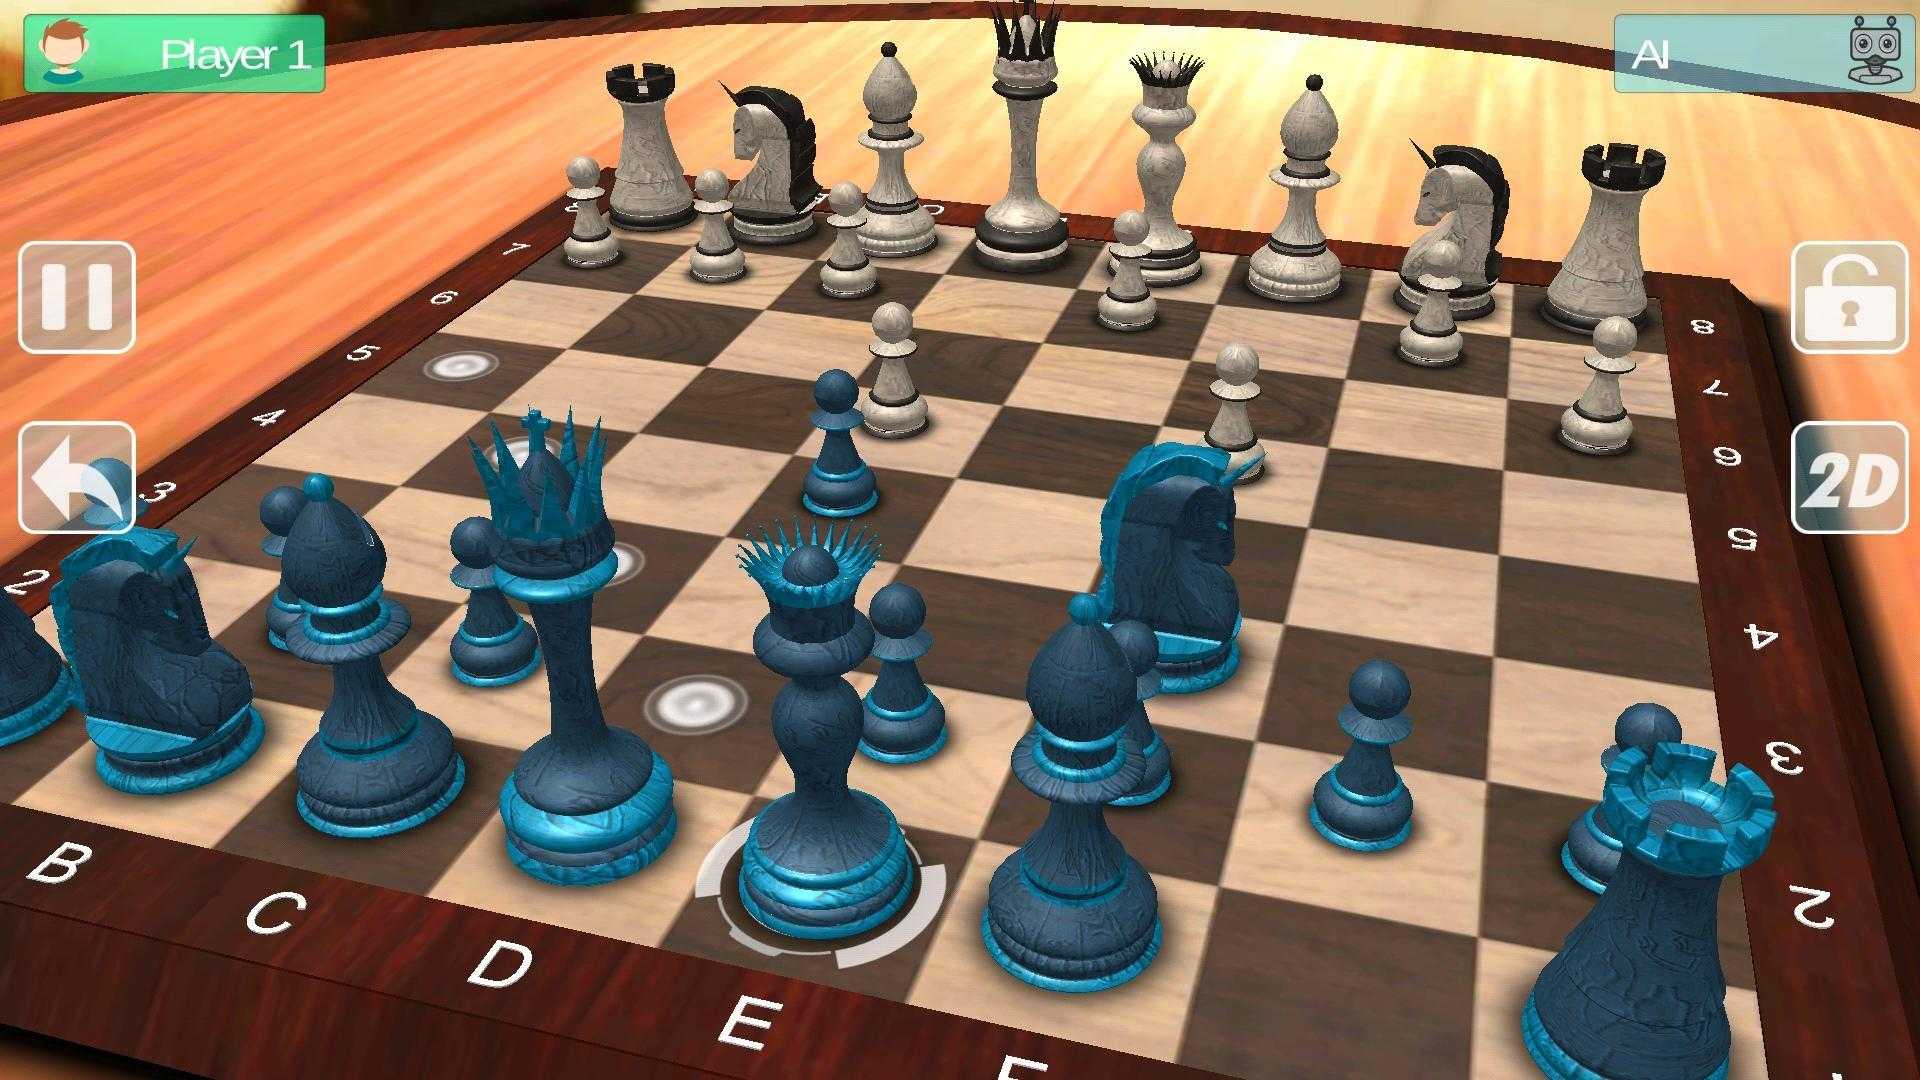 Шахматы со всеми живыми игроками. CHESSMASTER игра. Чессмастер шахматы. Шахматы 3д (Chess 3d free). Шахматы Чесс версия 2.